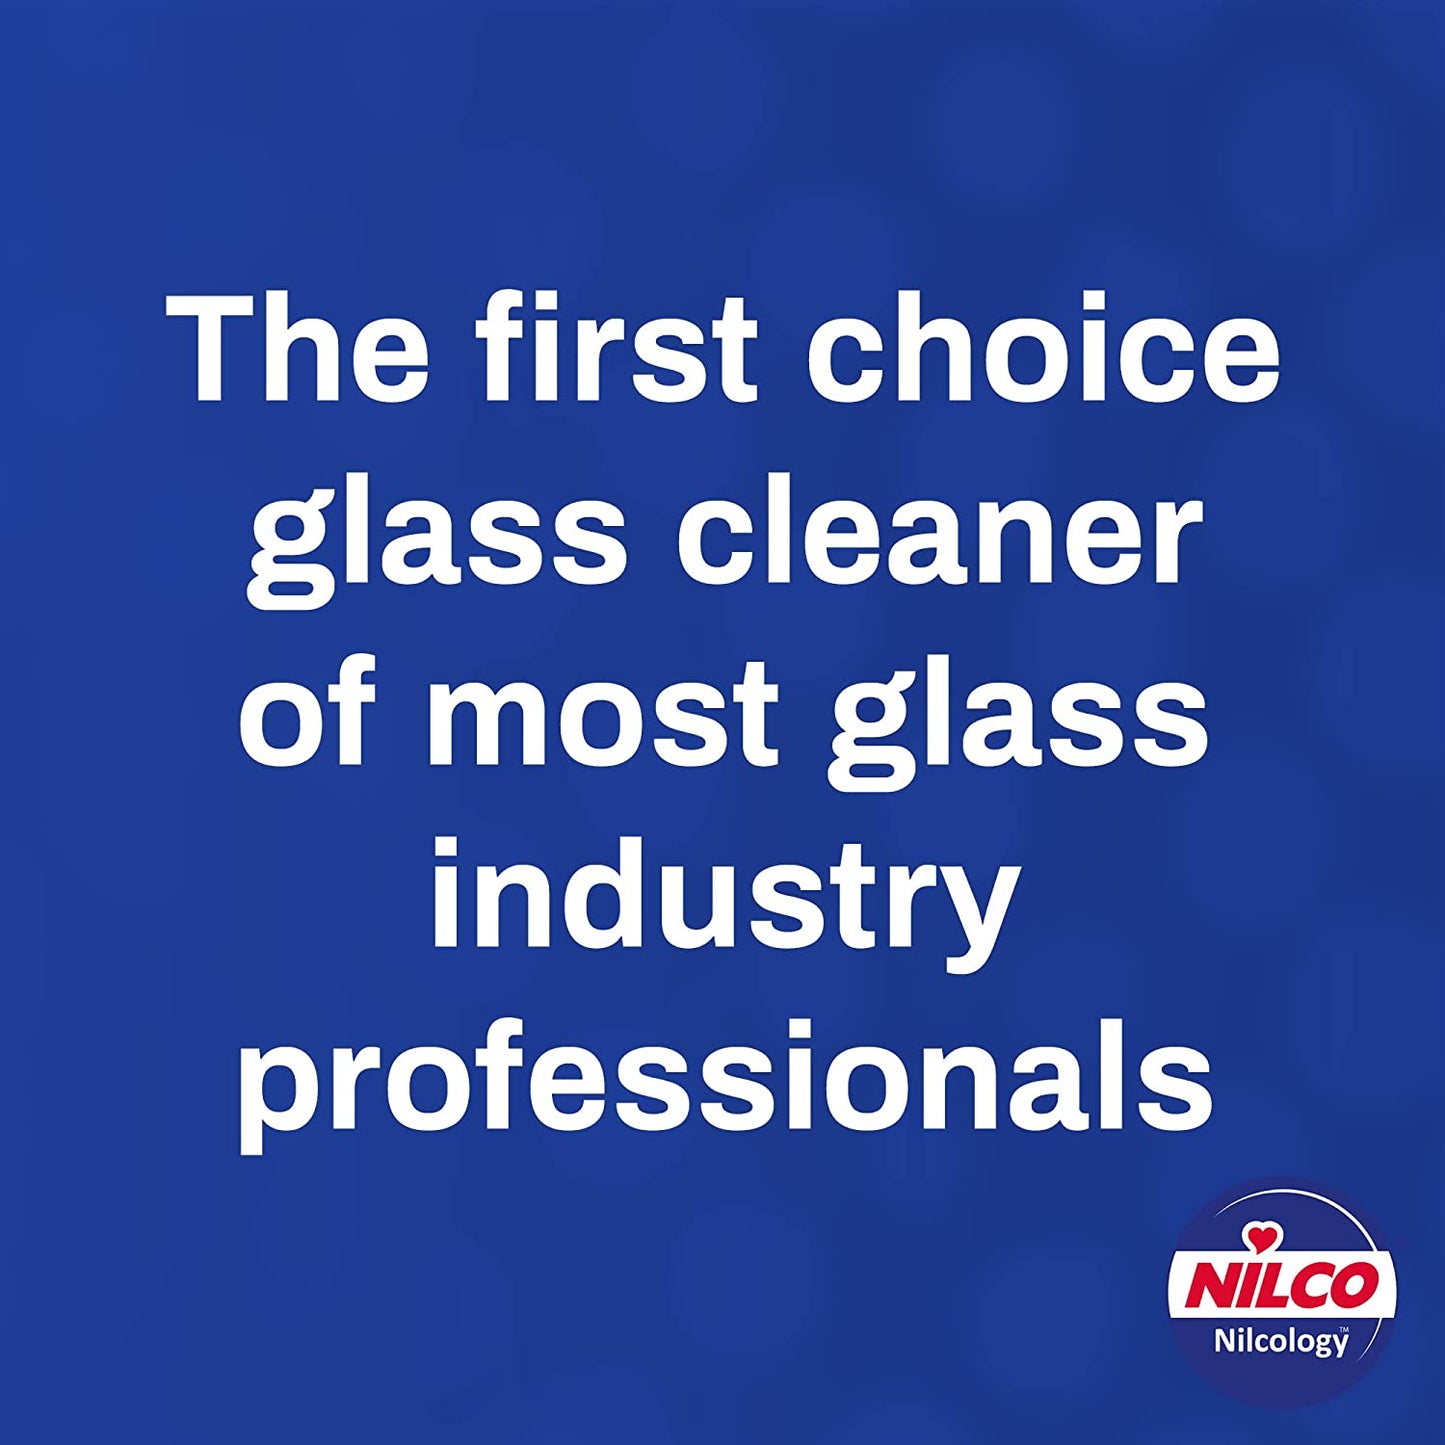 Nilco Nilglass Professional H3 Glass & Mirror Cleaner 1 Litre